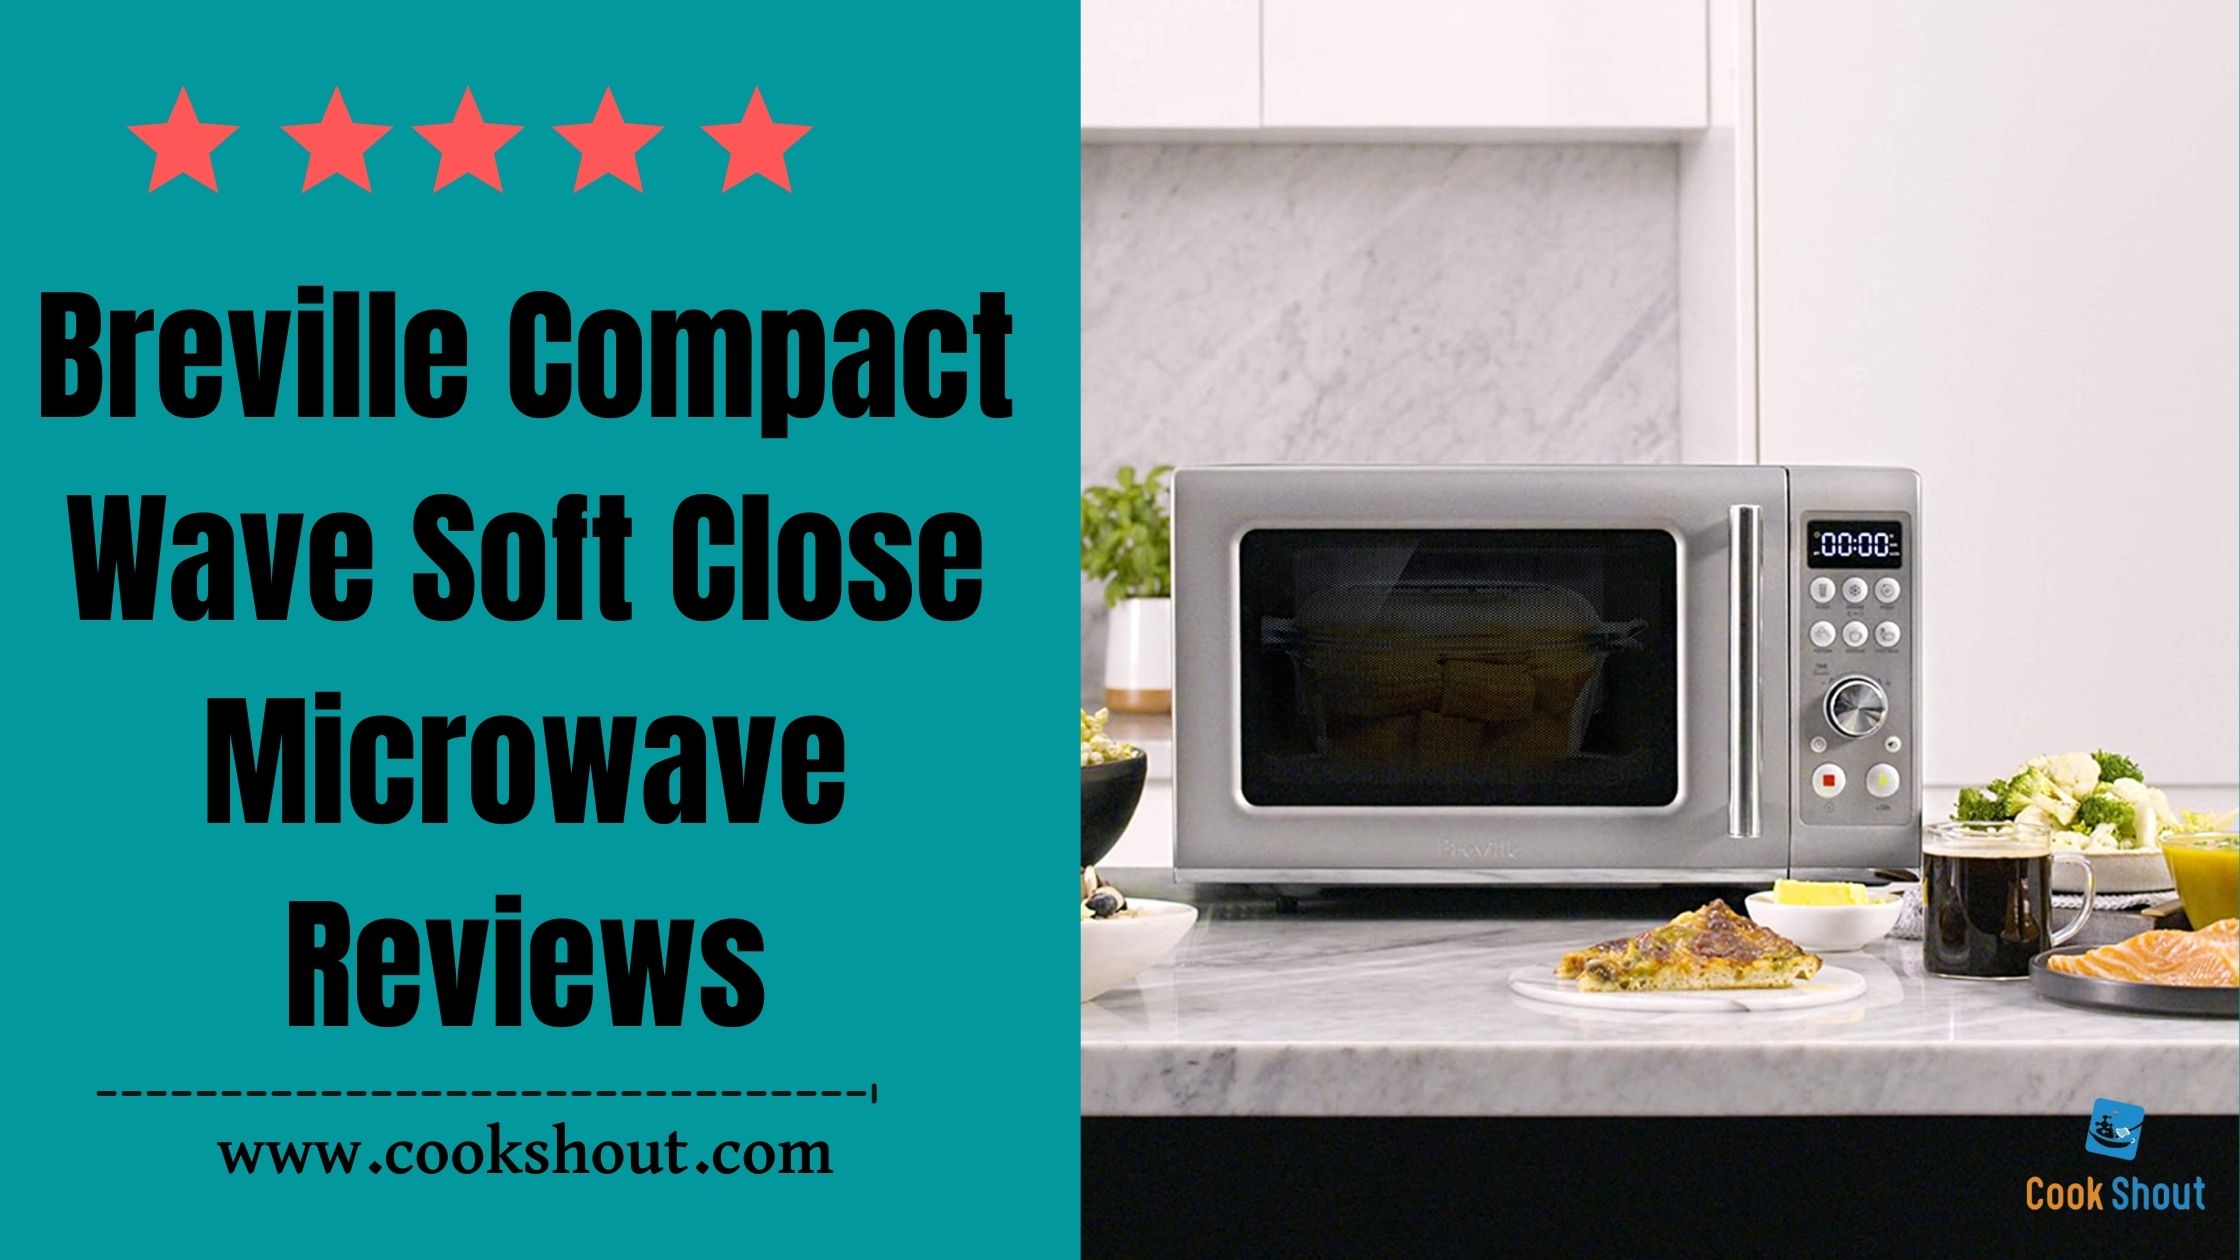 https://cookshout.net/wp-content/uploads/2021/10/Breville-Compact-Wave-Soft-Close-Microwave-Reviews.jpg